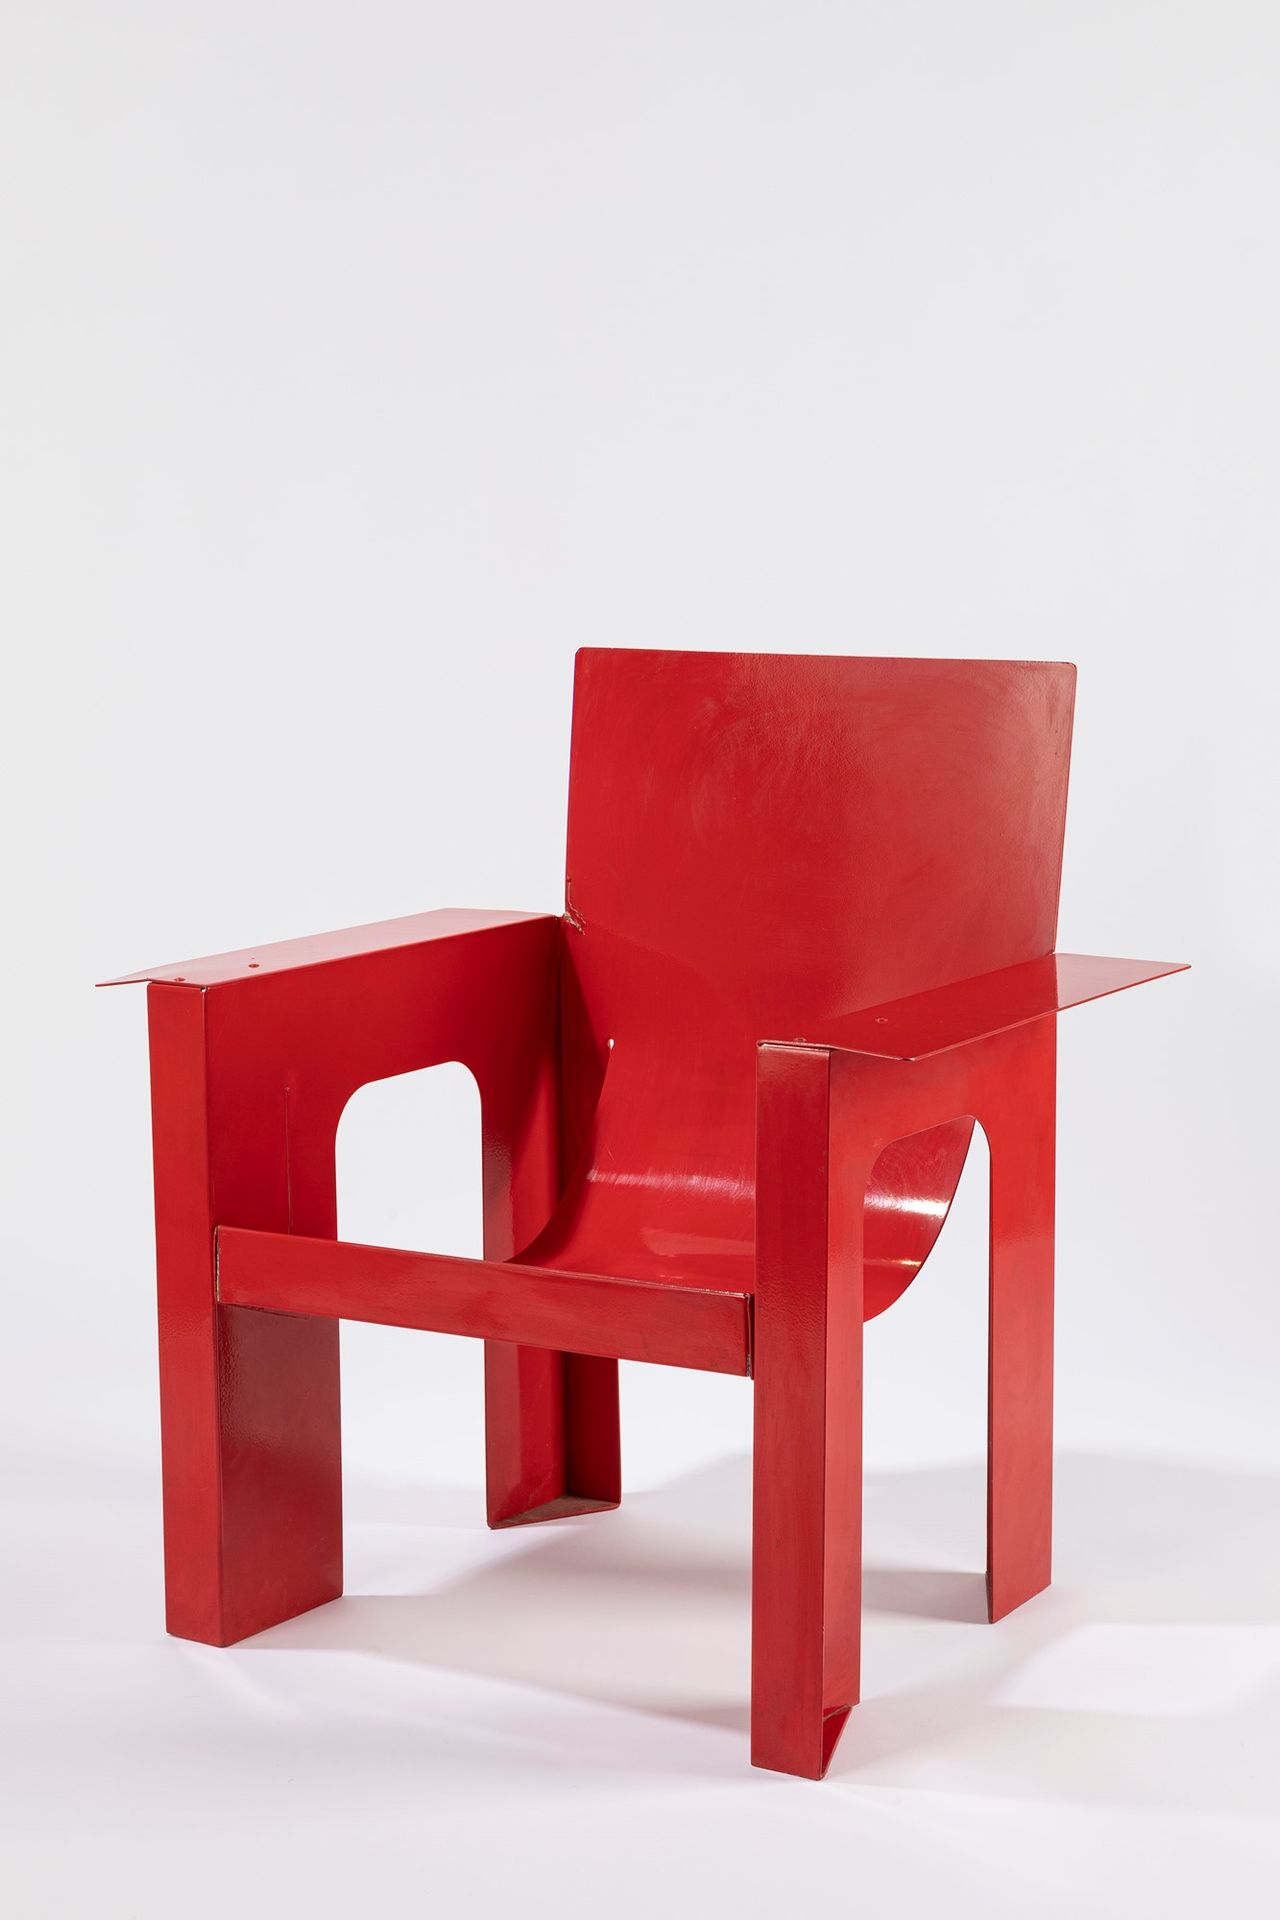 Giandomenico Belotti Rietveld, 1984

h 78 x 72.5 x 48
红色清漆金属椅。

Alias Design制造。
&hellip;